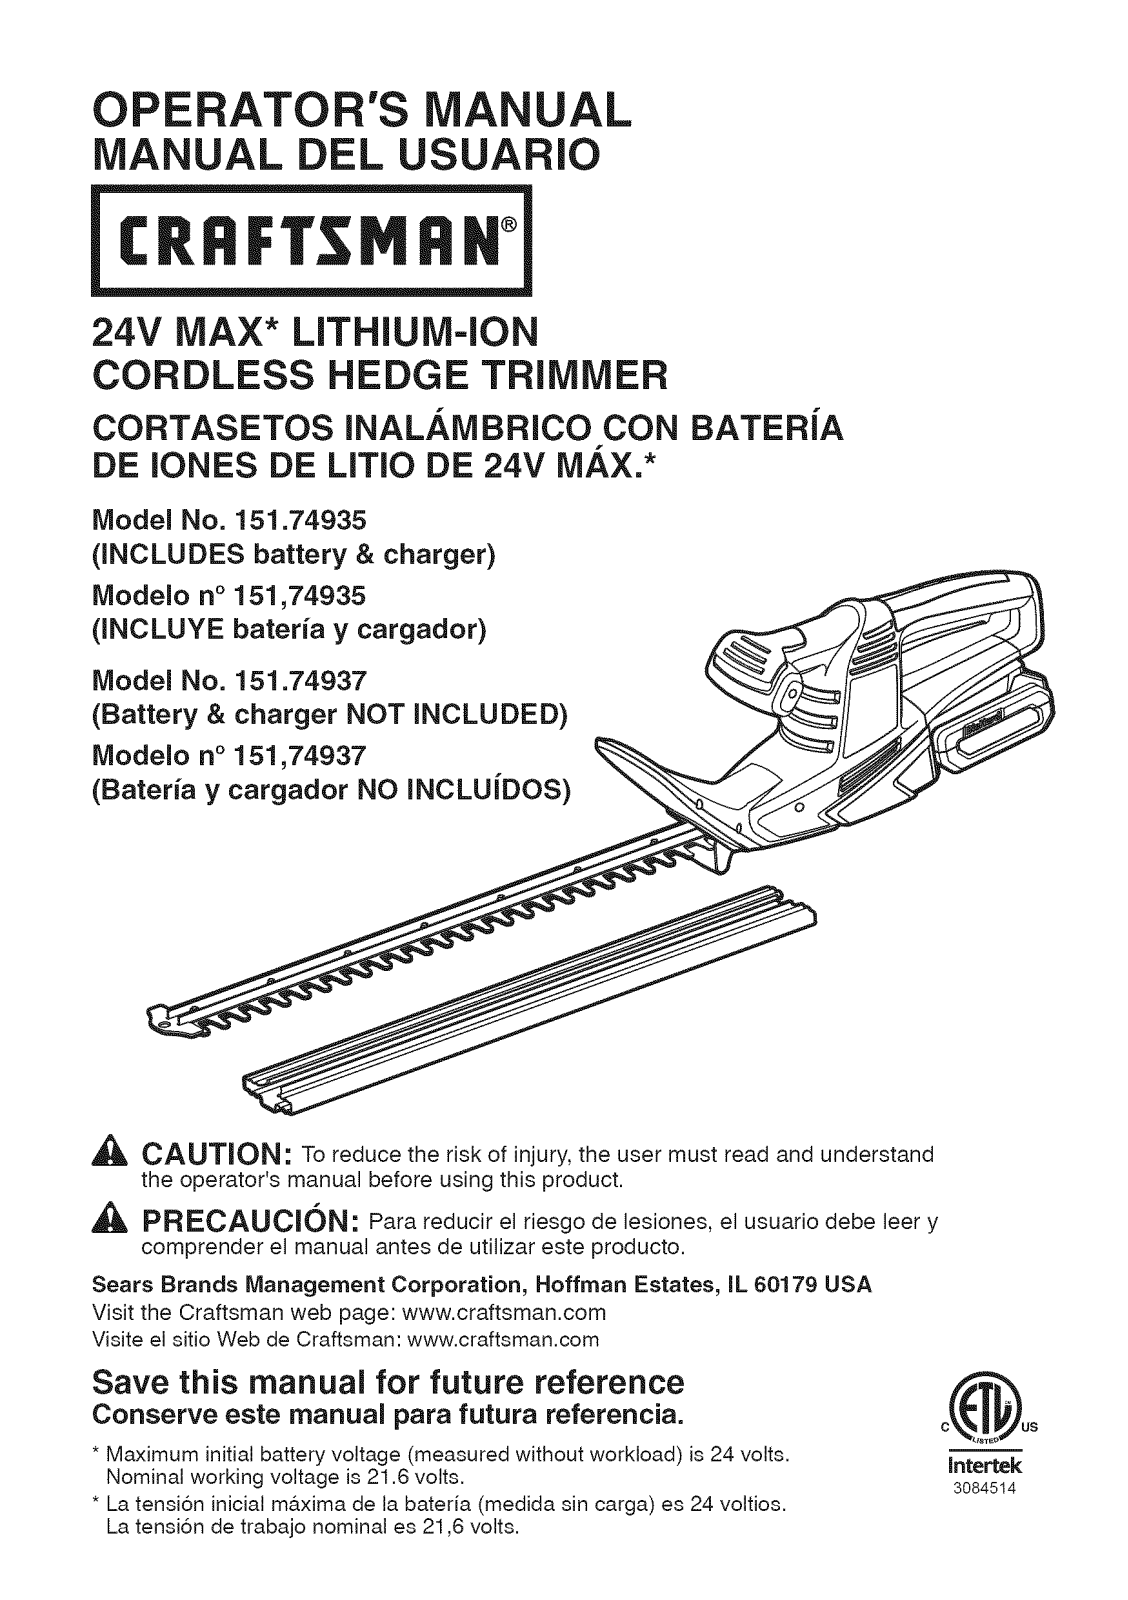 Craftsman 15174937 Owner’s Manual